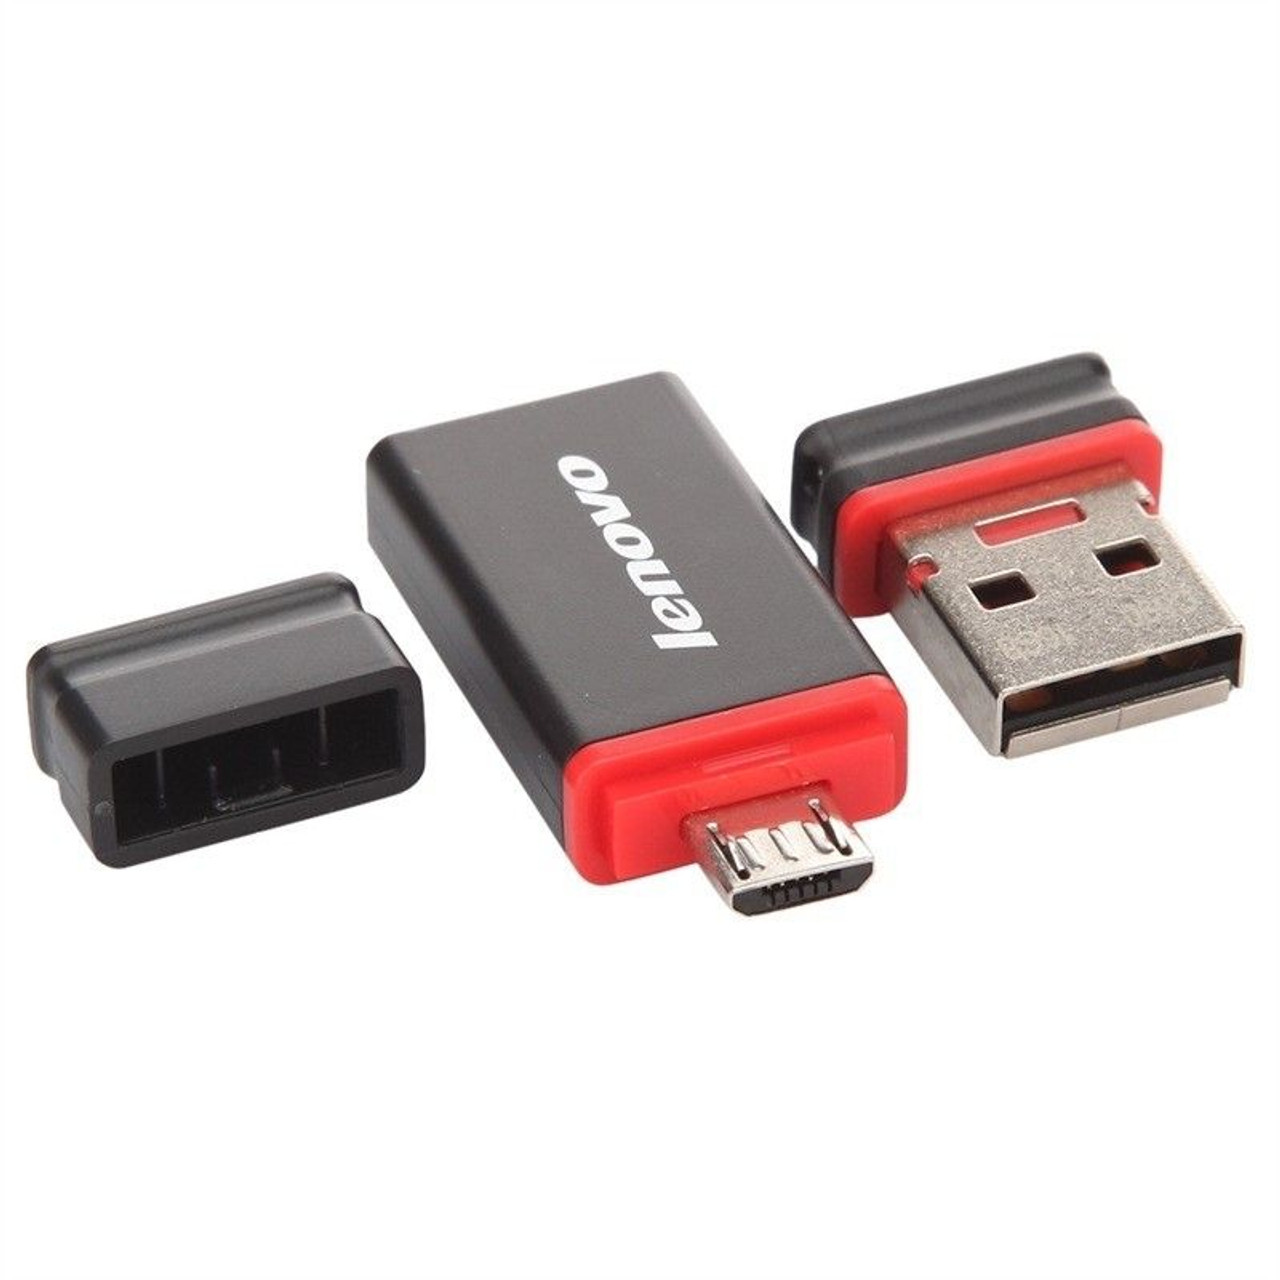 Lenovo OTG USB Flash Drive C590 16GB | 888016098 | AYOUB COMPUTERS | LEBANON